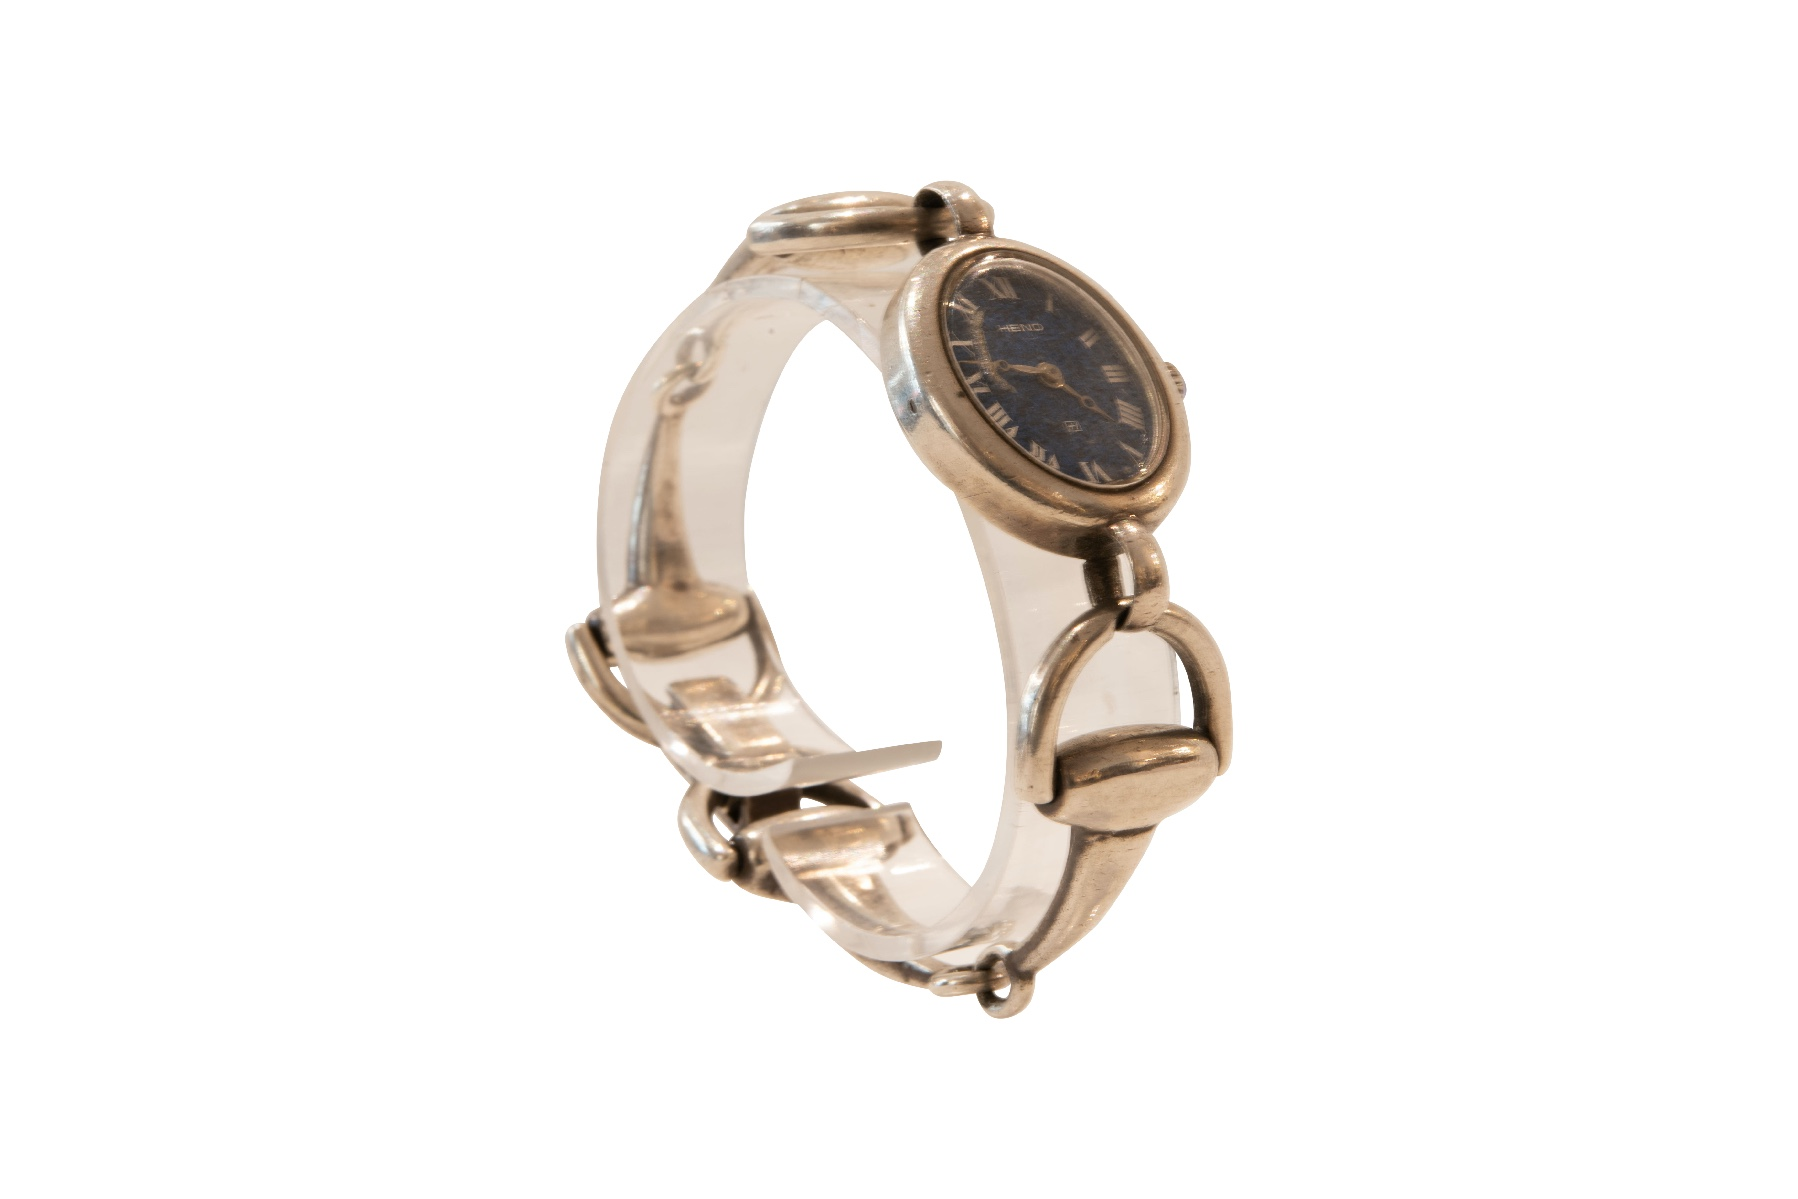 Heno Uhr, Handaufzug | Heno Watch, Manual Winding - Image 2 of 5